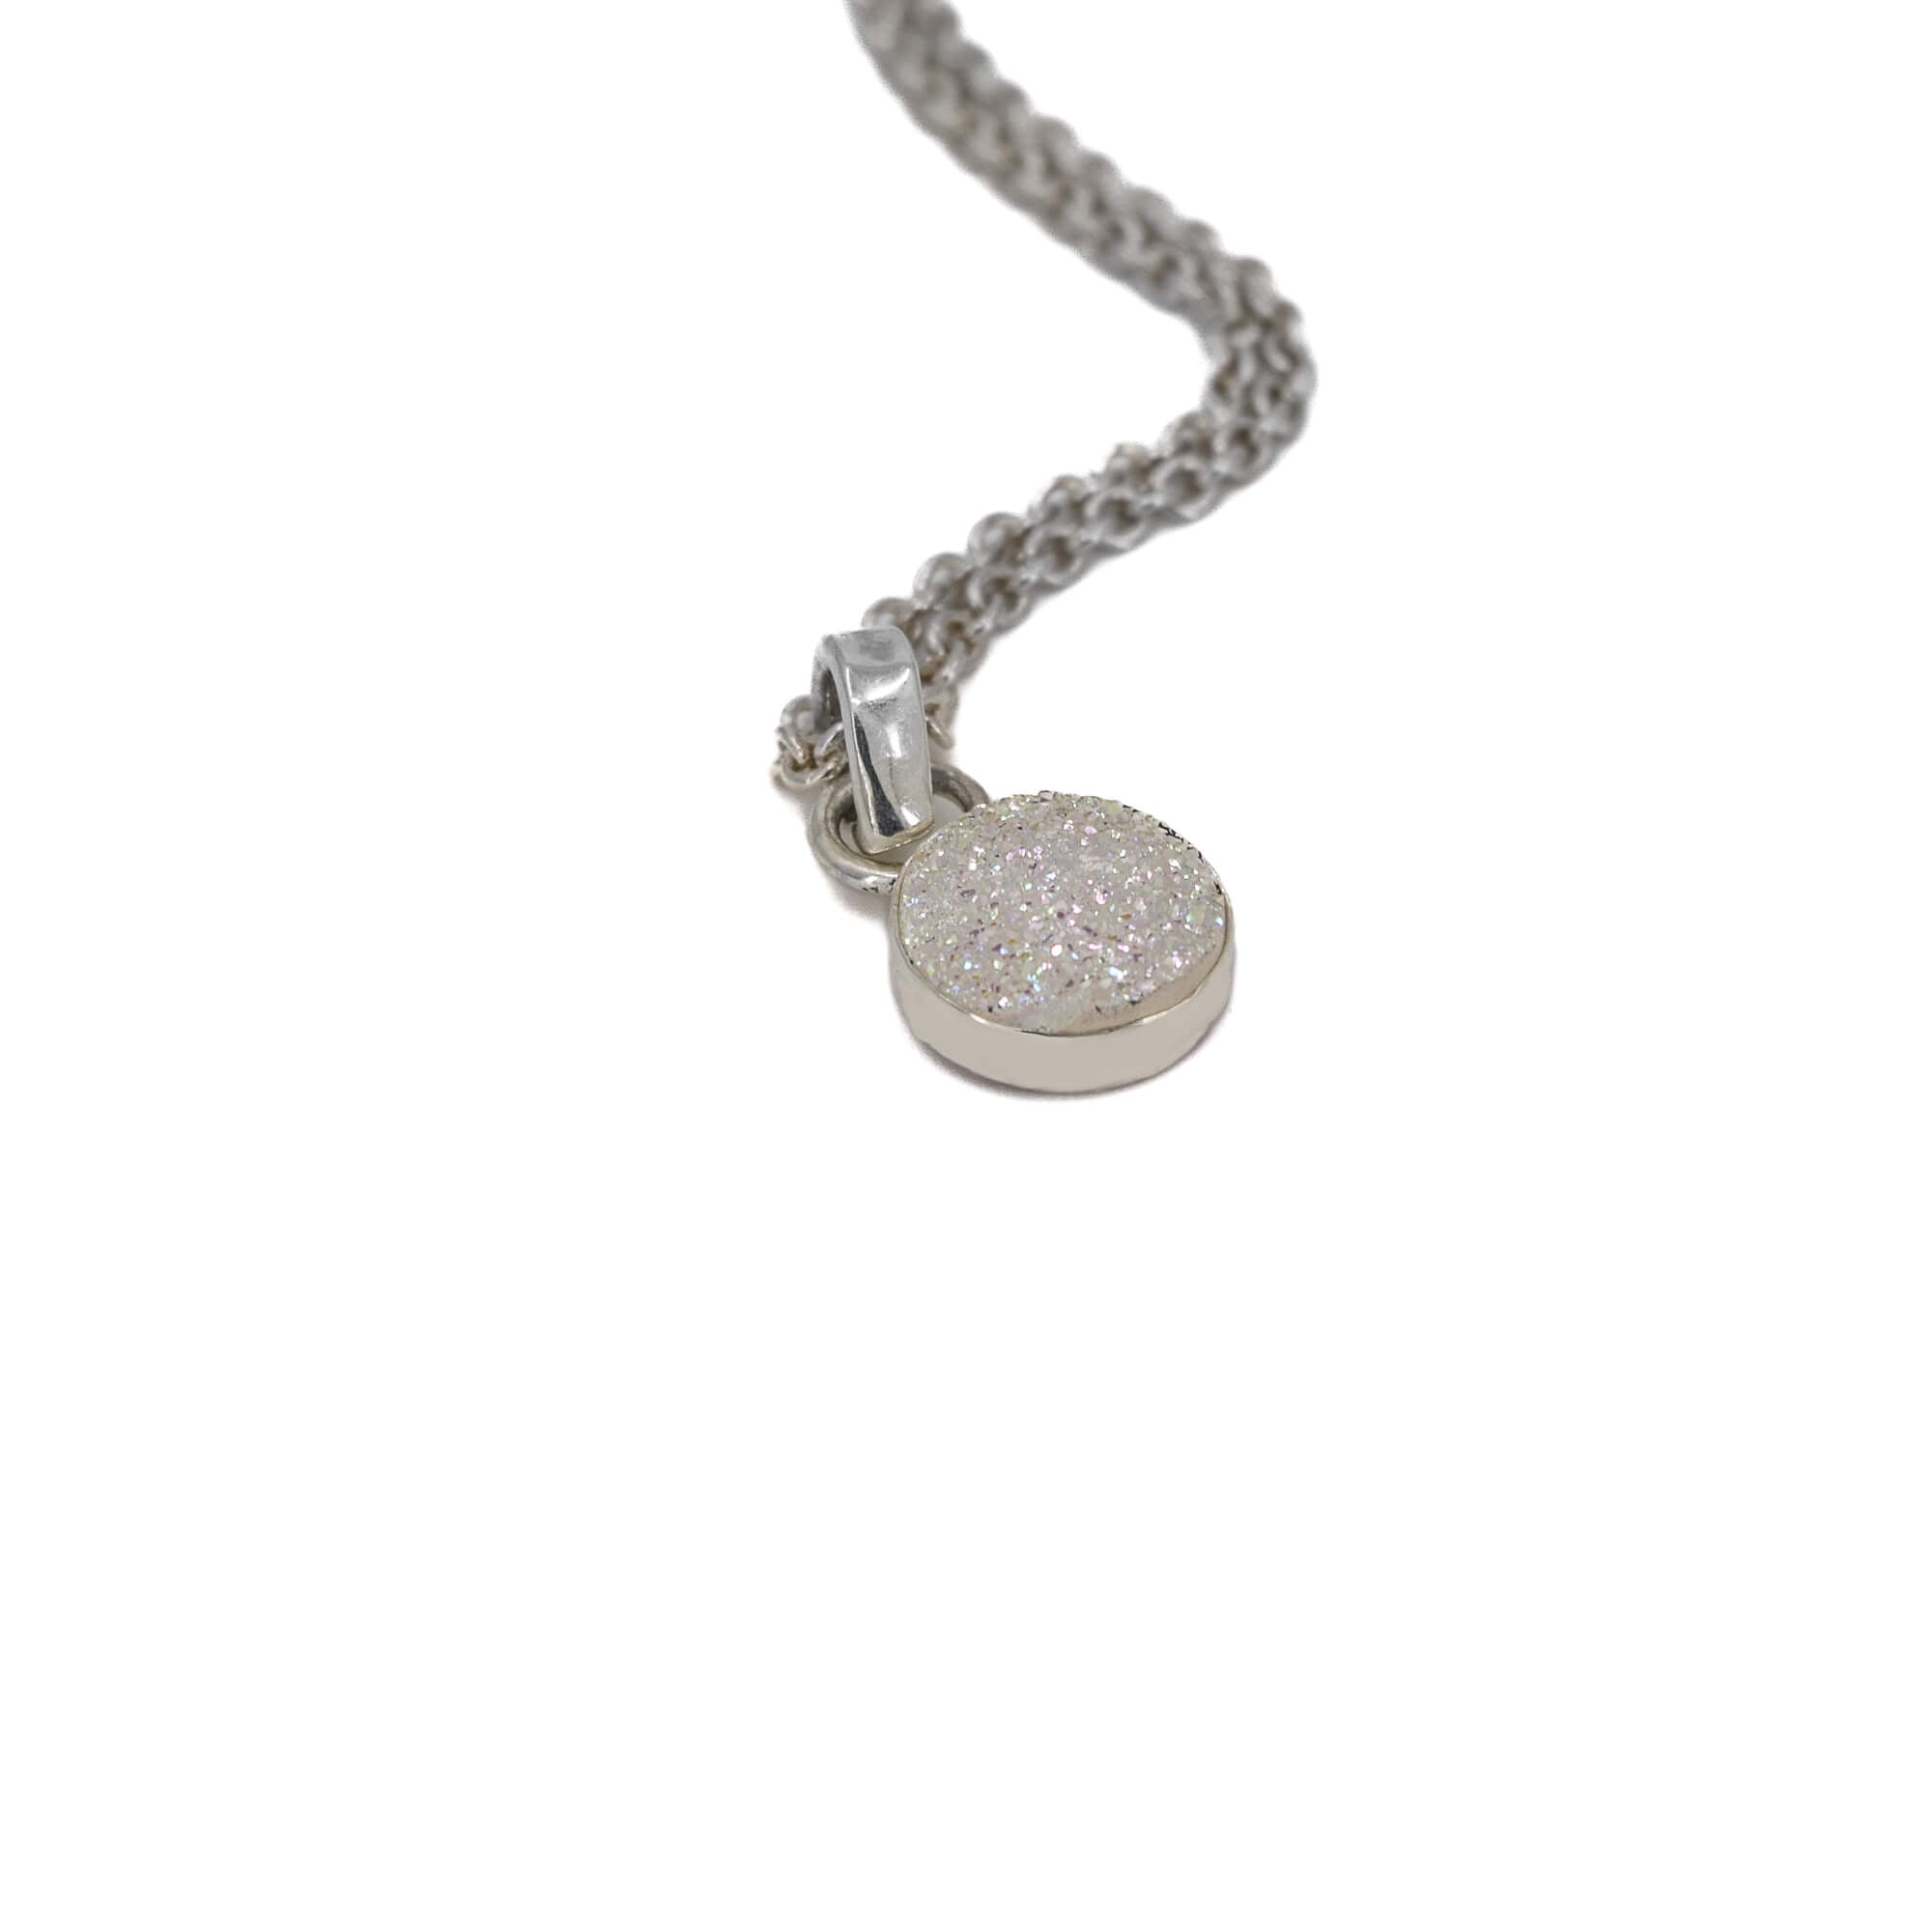 Tiny white druzy pendant necklace sterling silver 